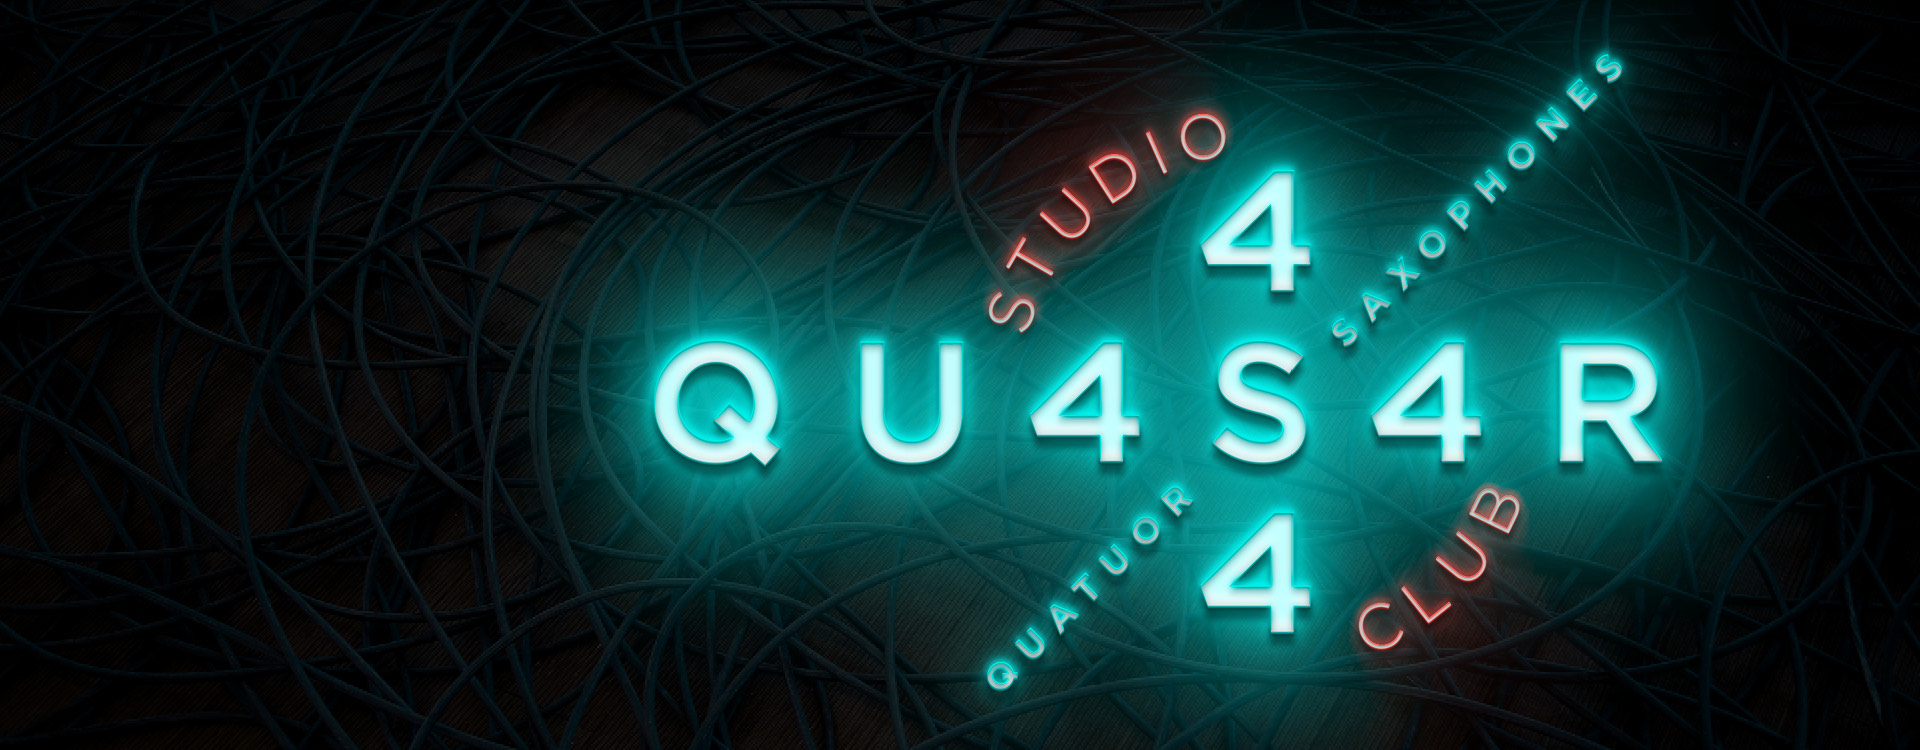 Bannière Quasar Studio Club